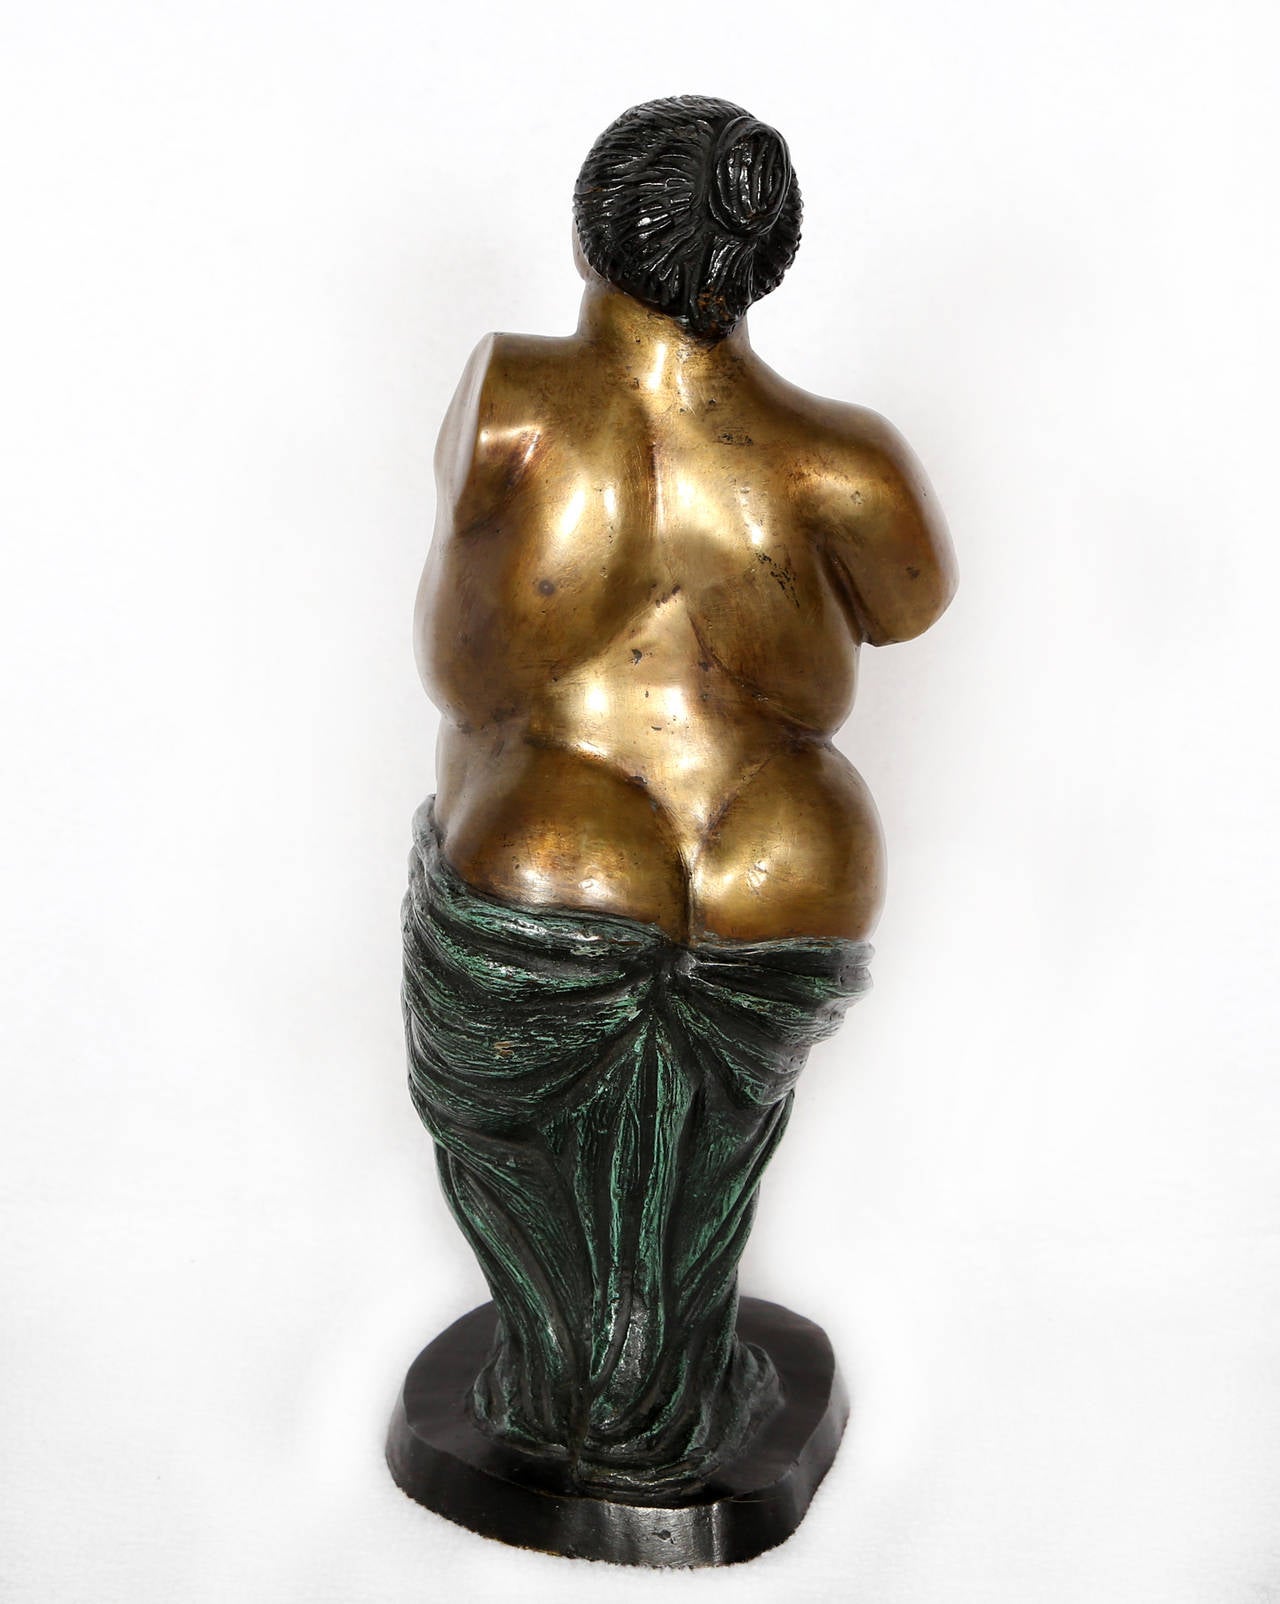 Title: Venus
Year: circa 1990
Medium: Bronze Sculpture, signature and number inscribed
Edition: XIV/XXX
Size: 11 x 4 x 5 in. (27.94 x 10.16 x 12.7 cm)